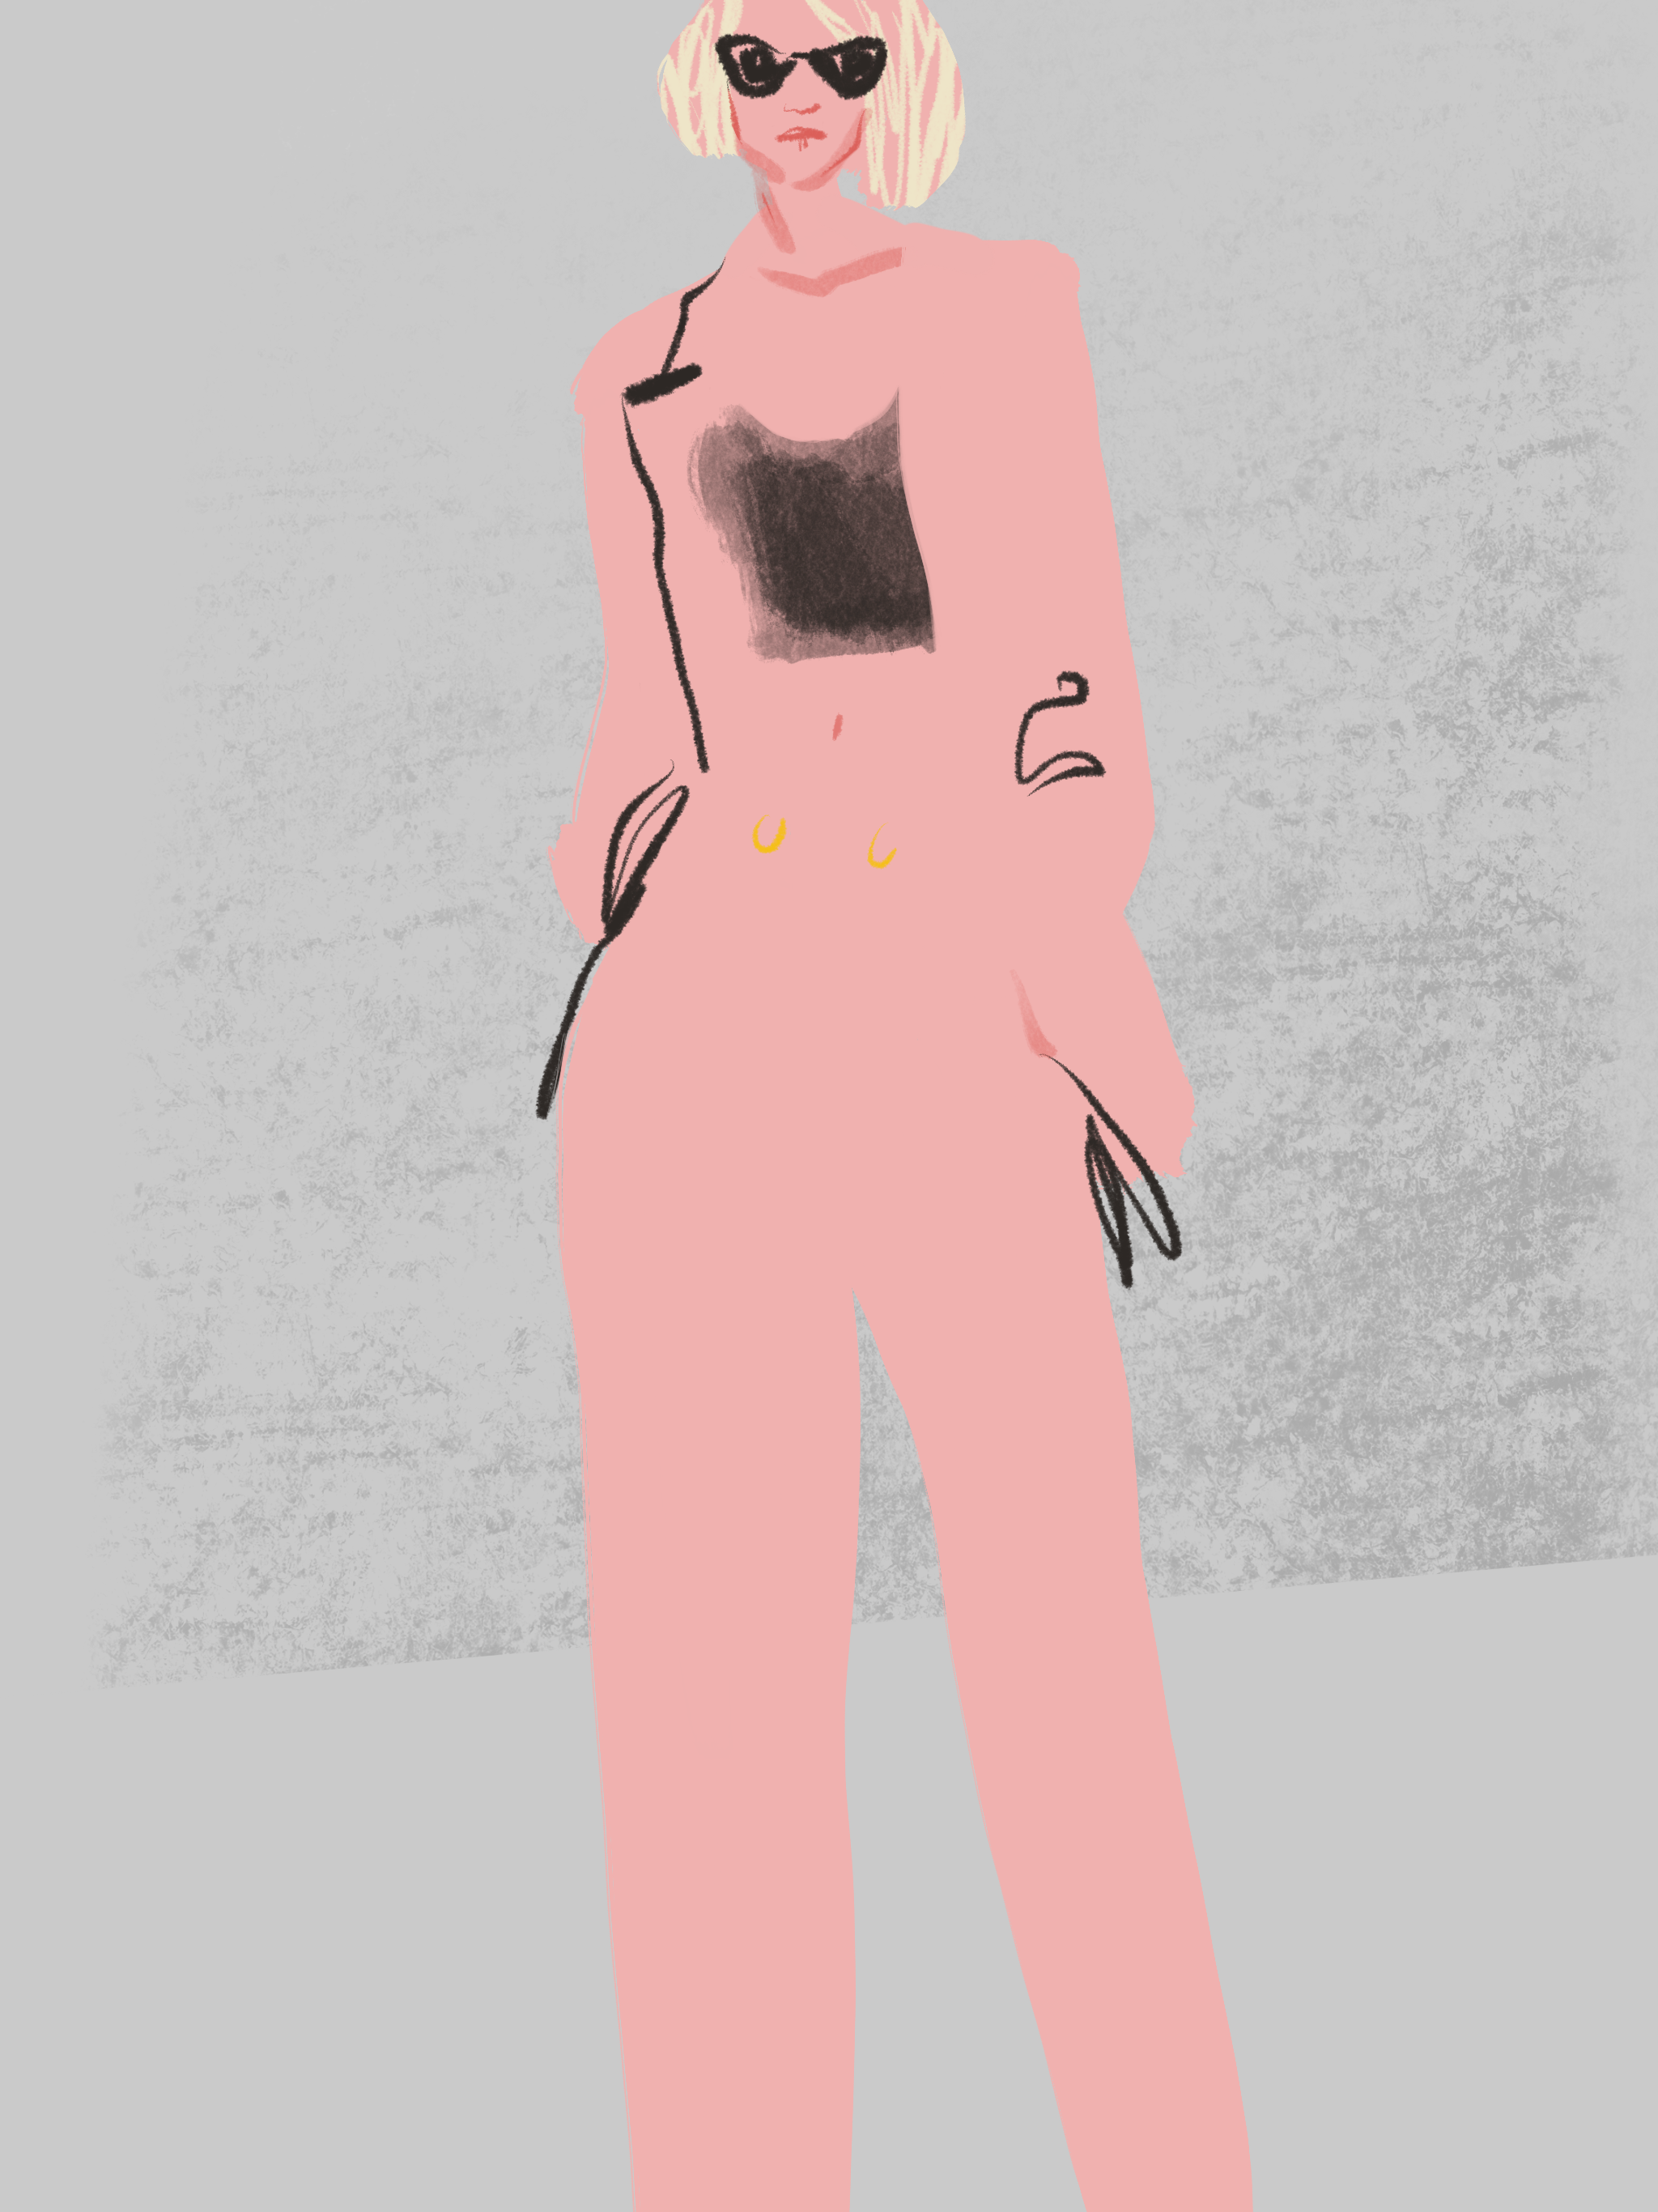 Pink Woman Suit, fashion illustration by Silvana Mariani